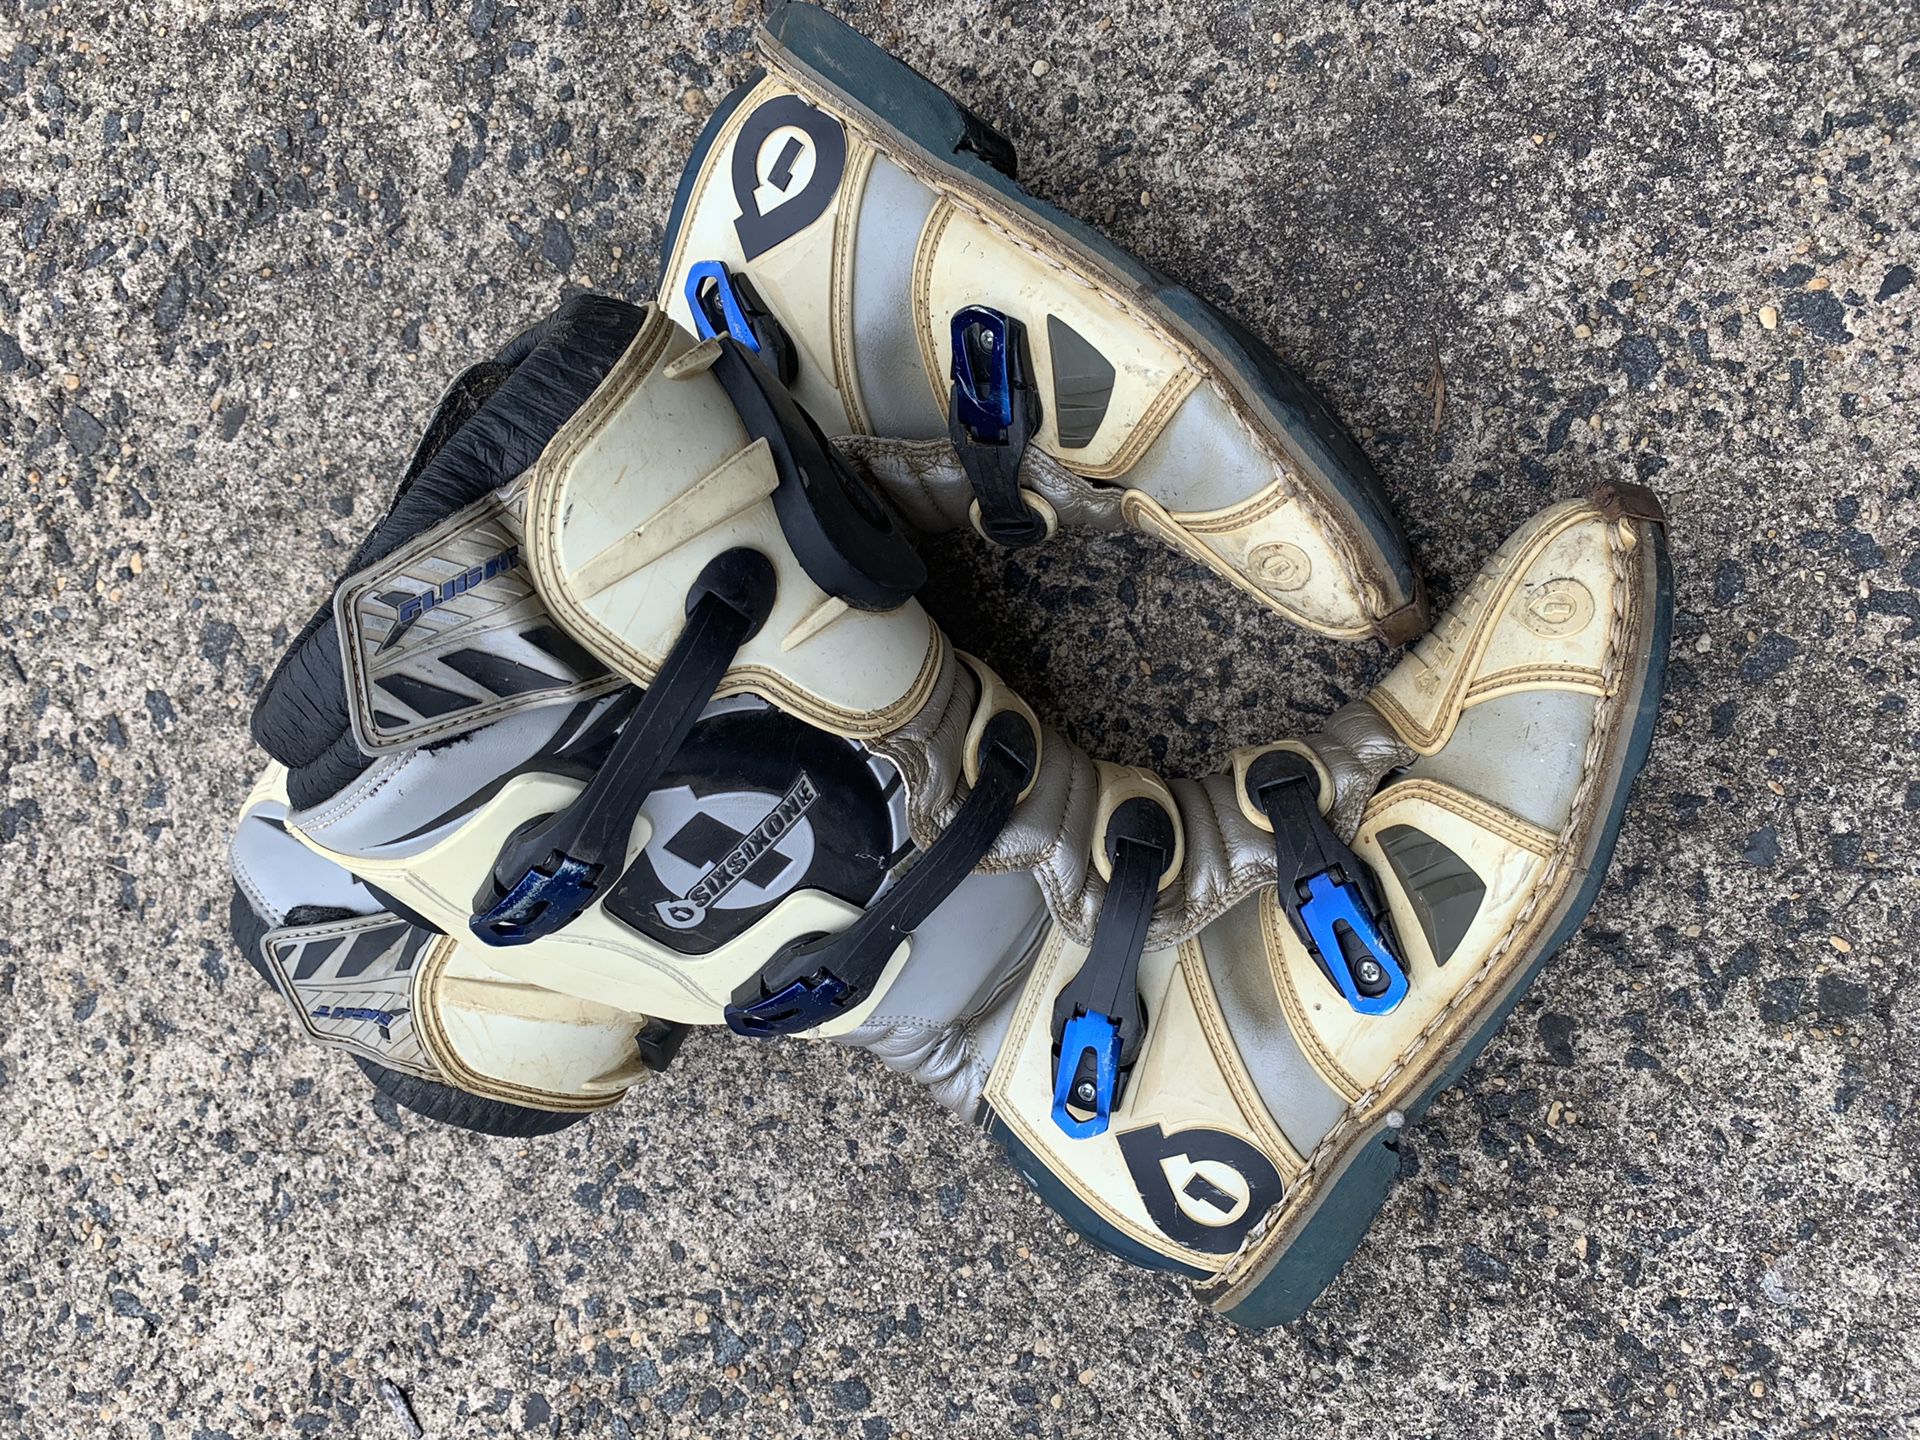 Six One Motocross Flight Boots (Size 12)